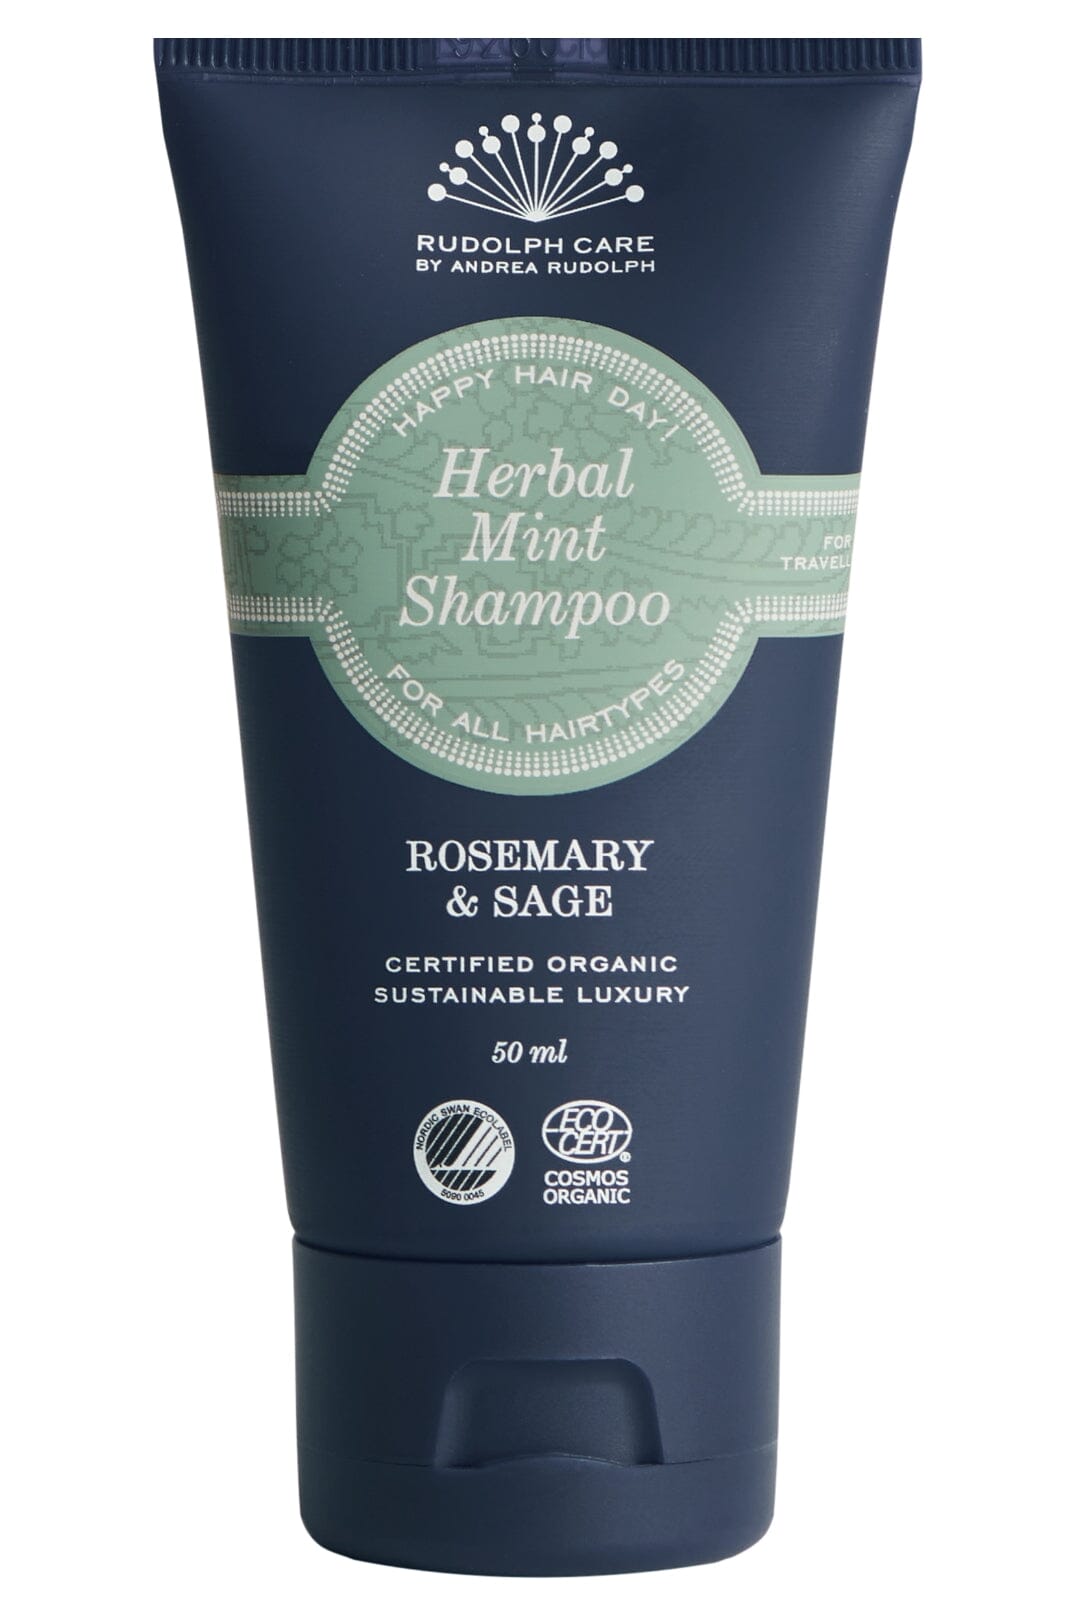 Rudolph Care - Herbal Mint Shampoo Travelsize Shampoo 